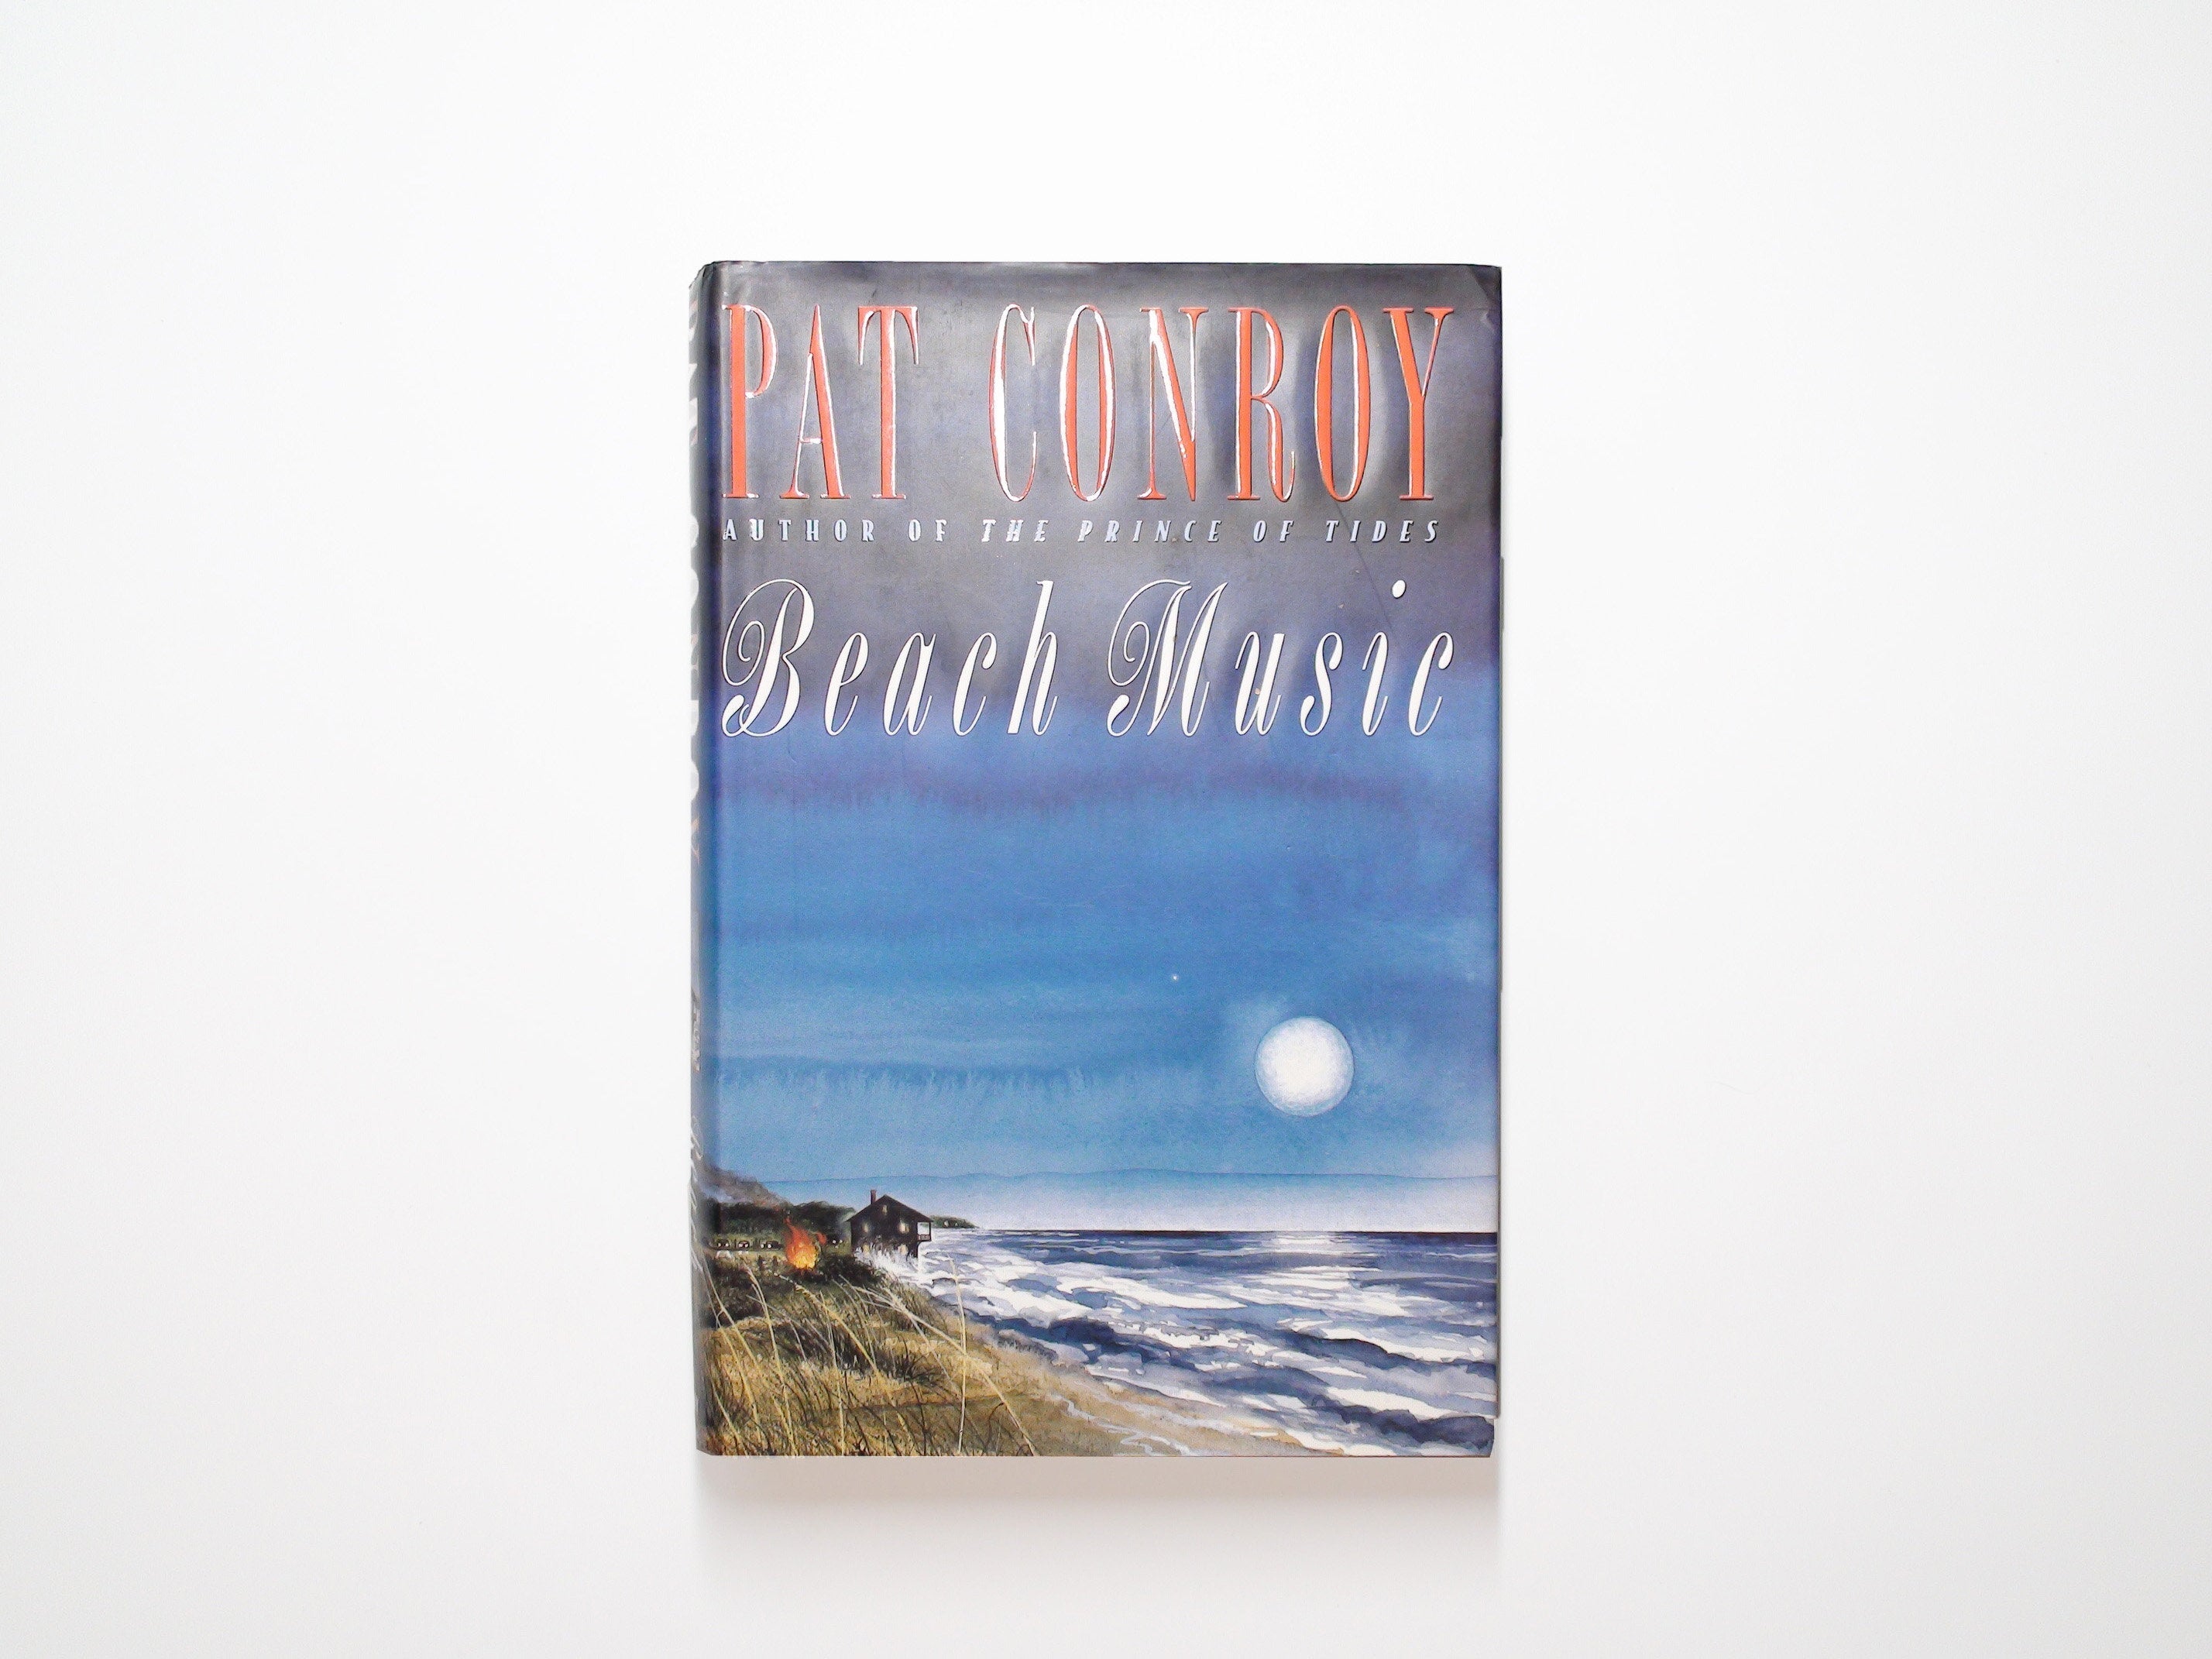 Beach Music, by Pat Conroy, 1st Ed, 1st Printing, Hardcover w DJ, June 1995